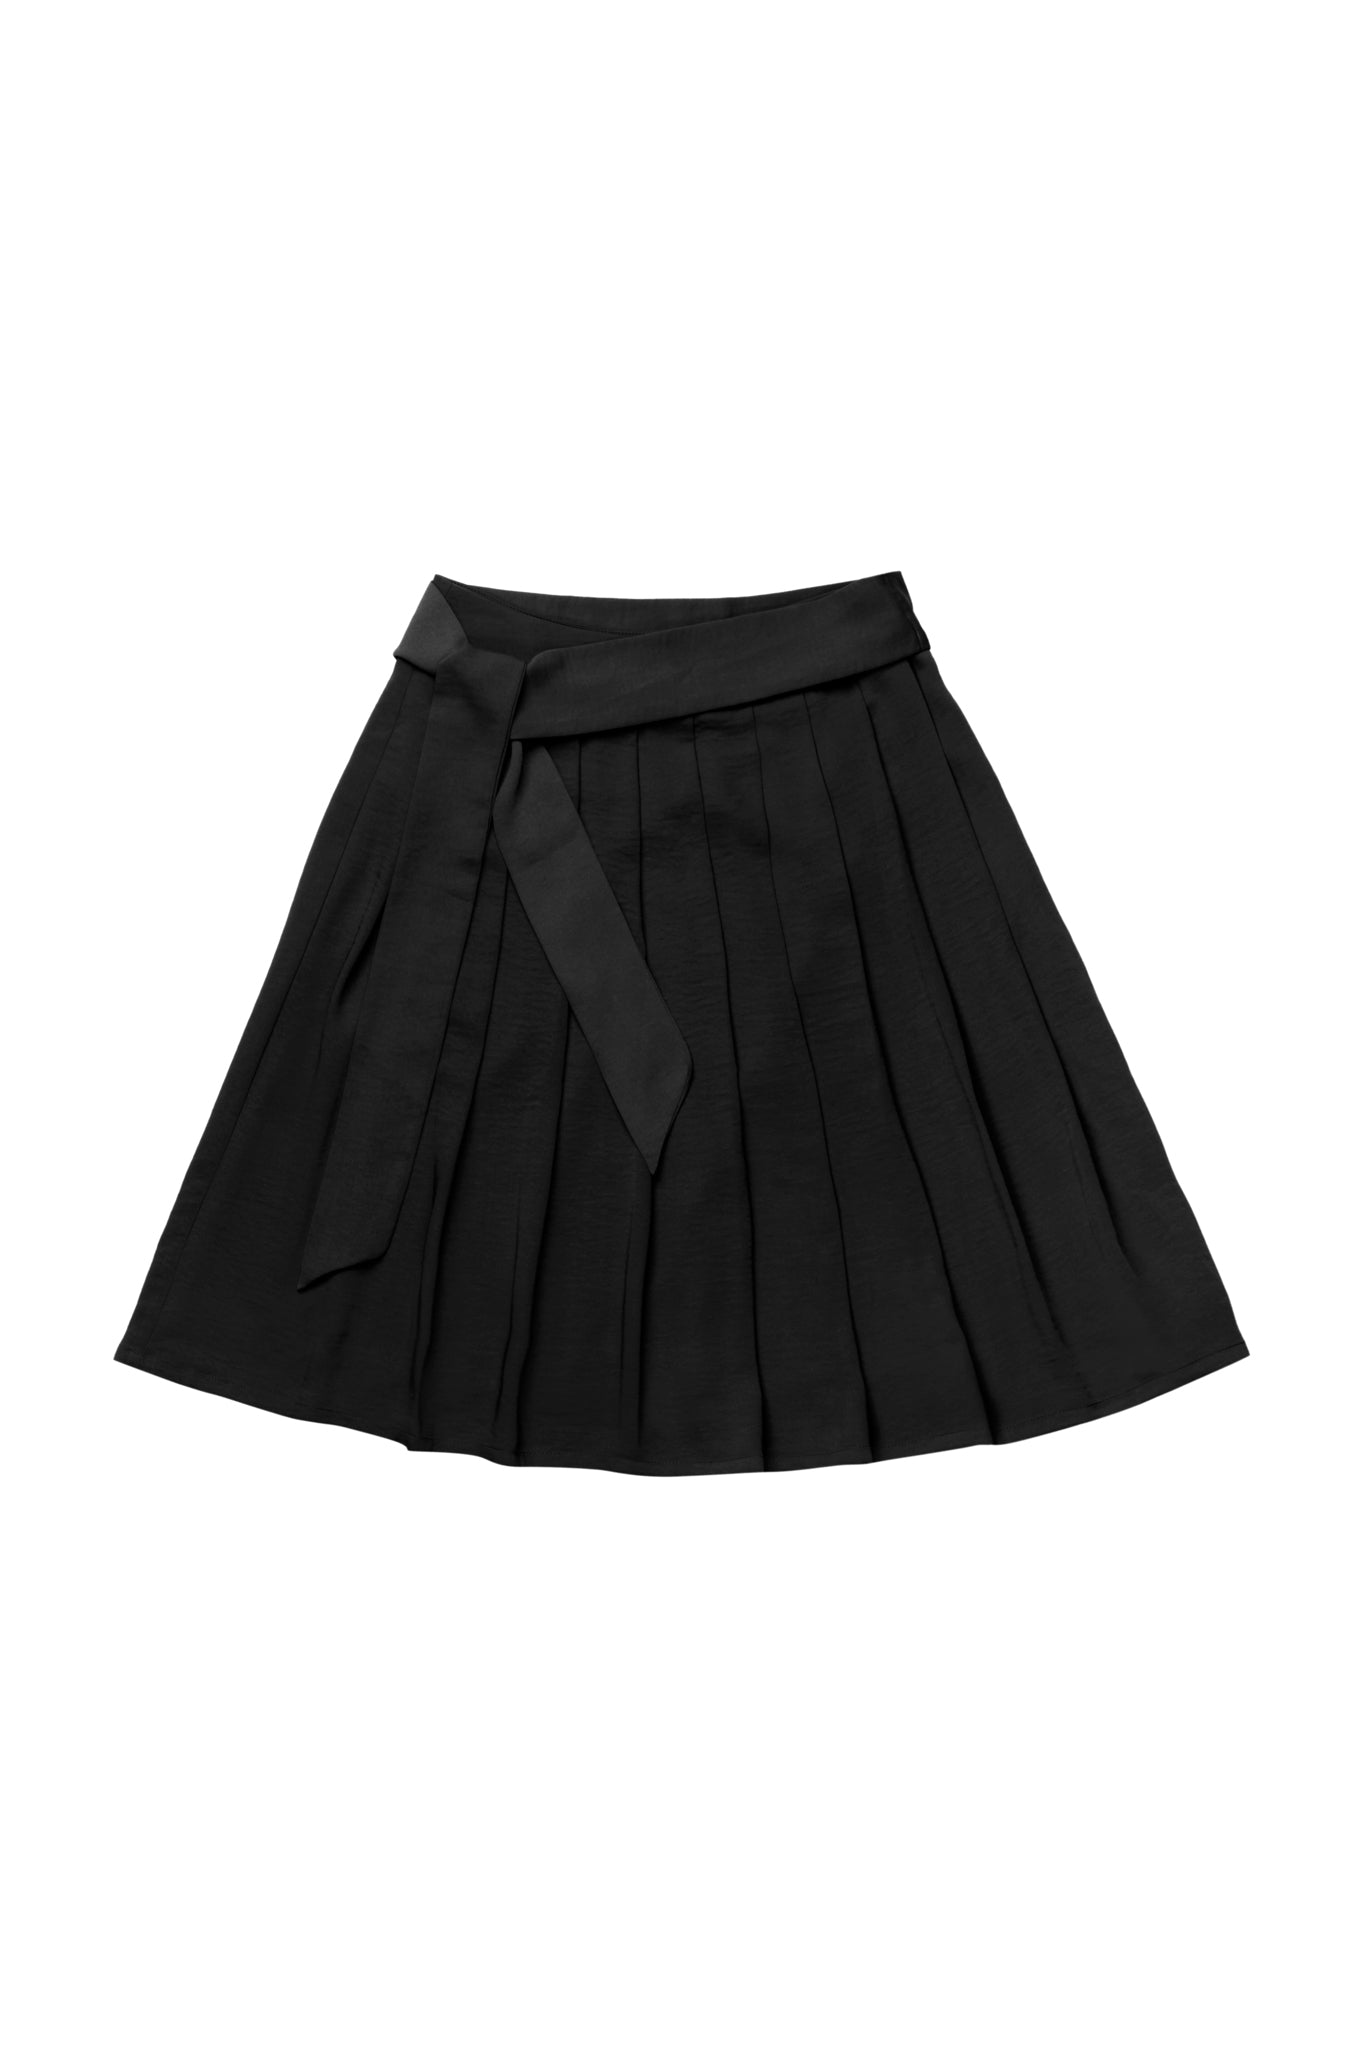 Off-White belted pleated miniskirt - Black